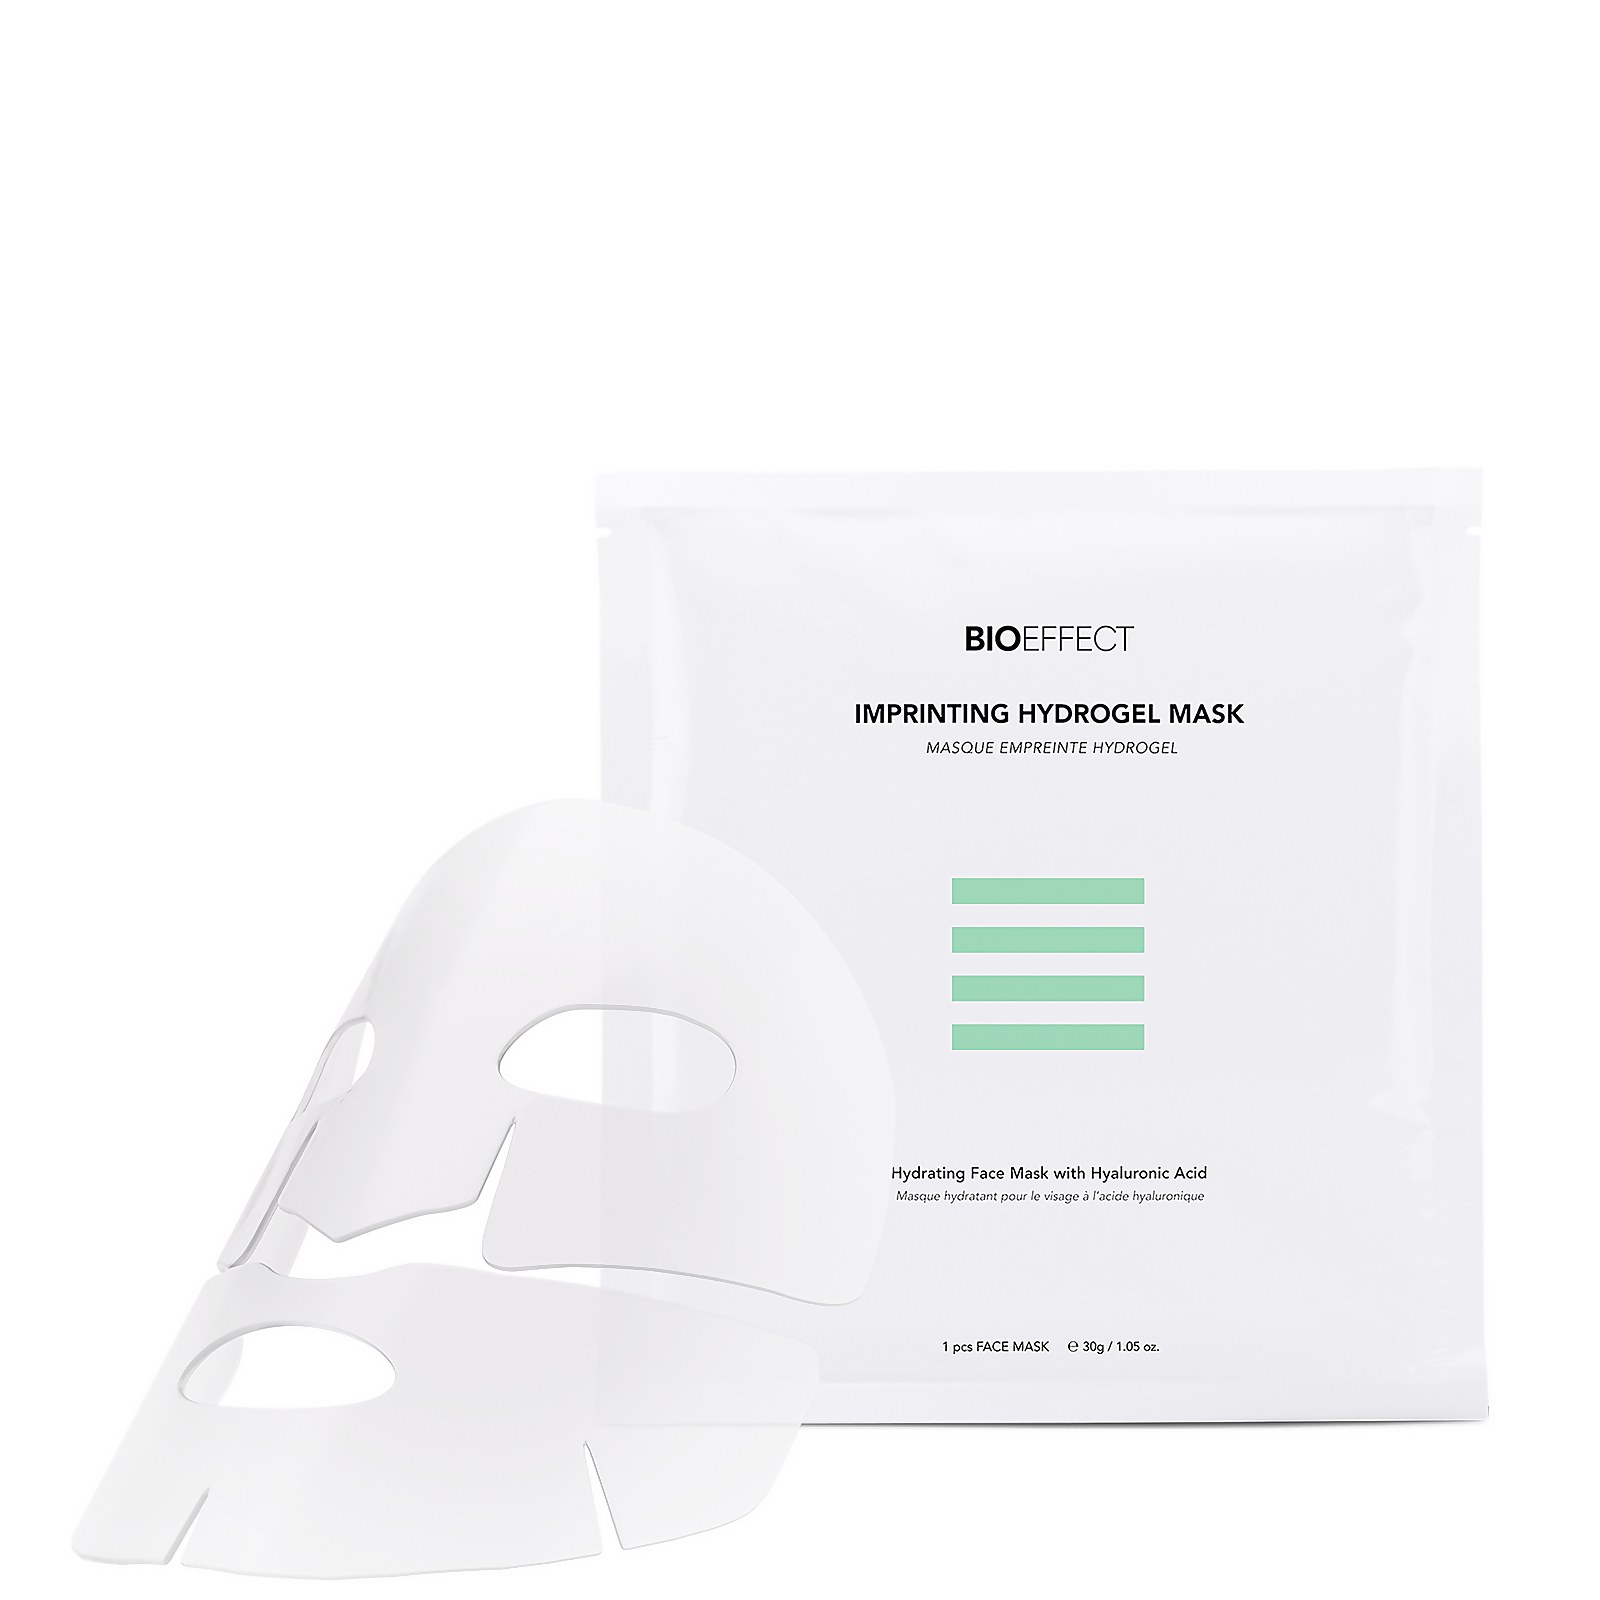 BIOEFFECT Imprinting Hydrogel Mask 25g (Worth PS14.00)